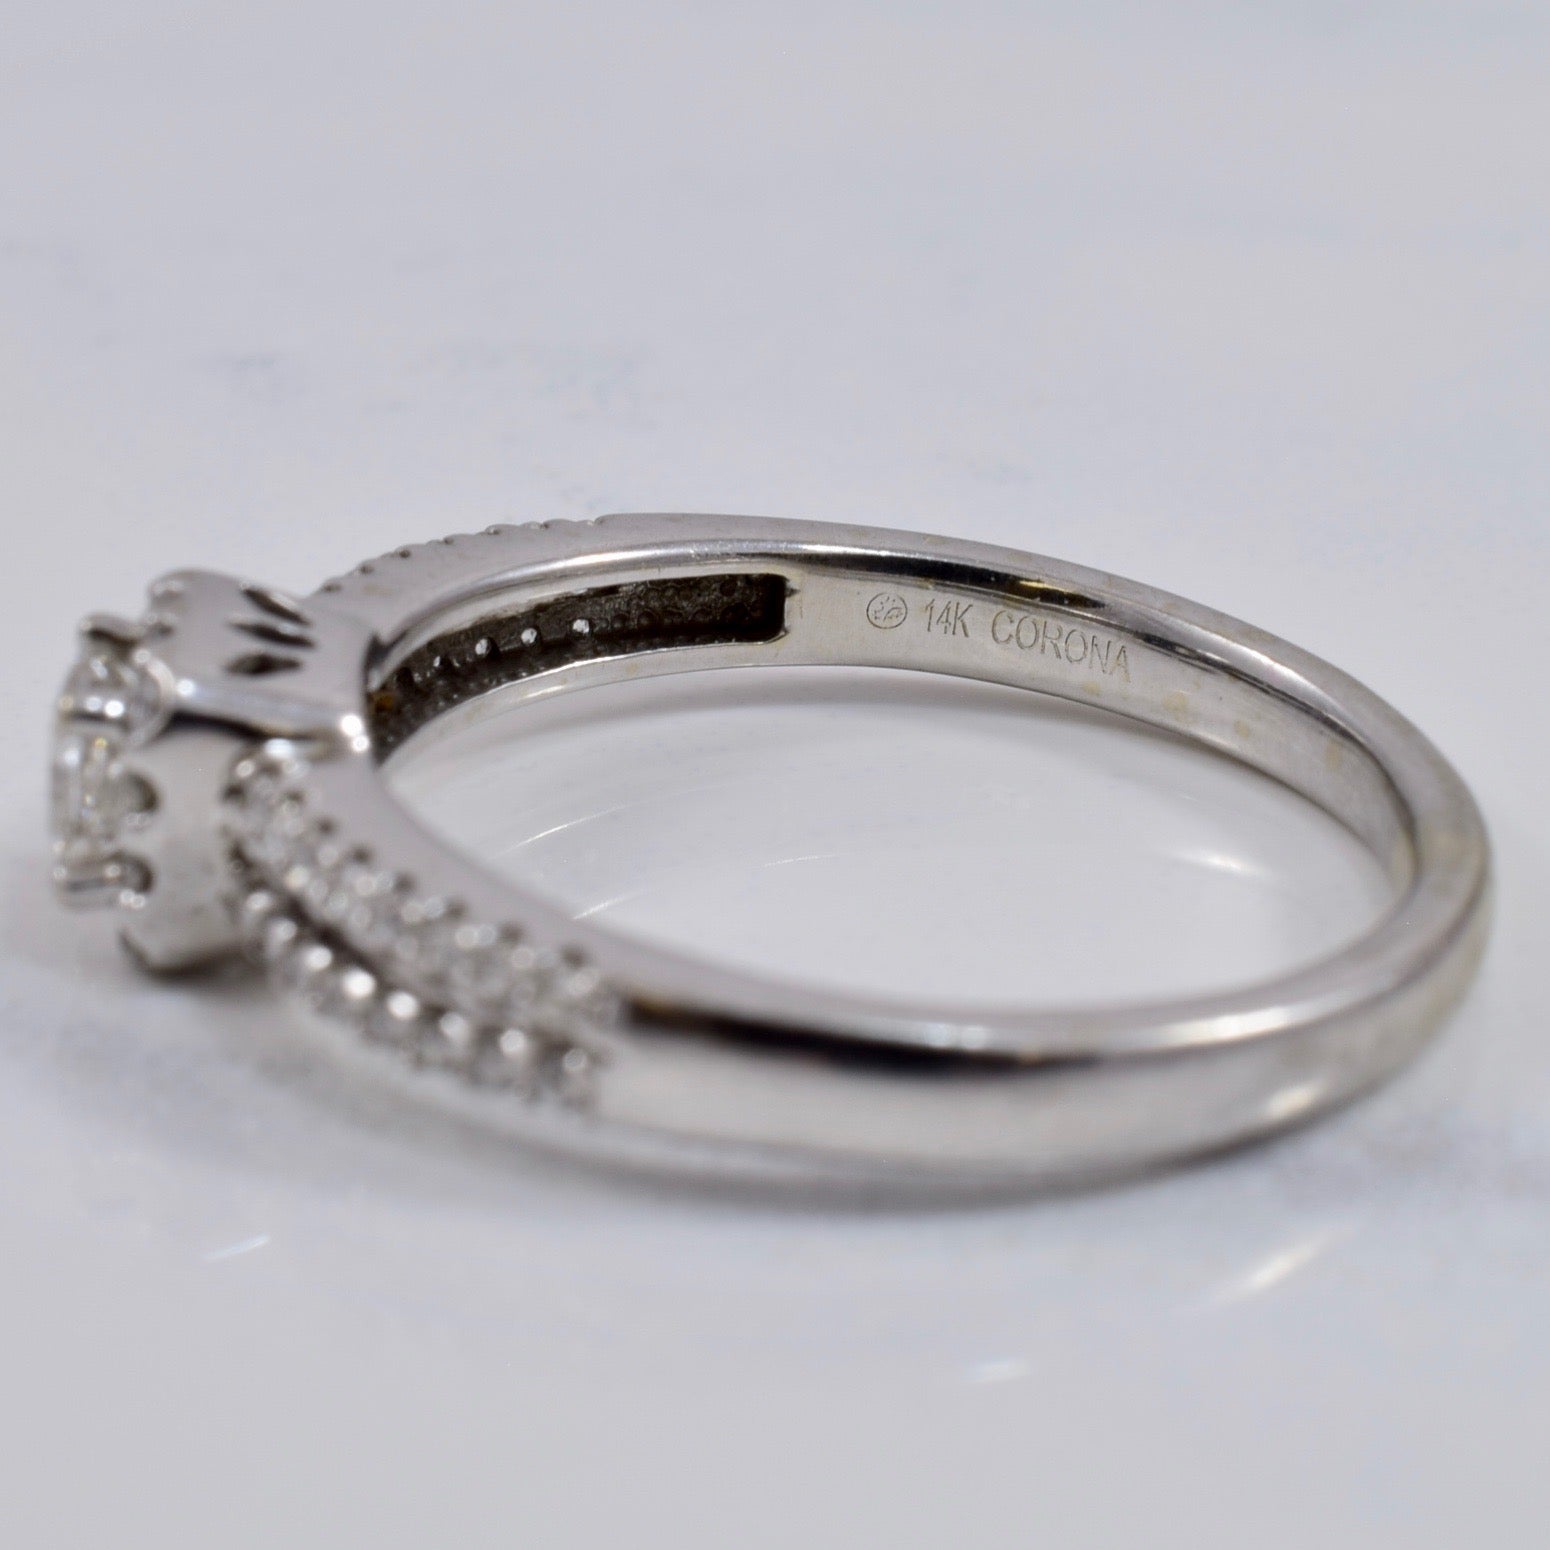 Princess Cut Diamond Engagement Ring | 0.37 ctw SZ 7.5 |